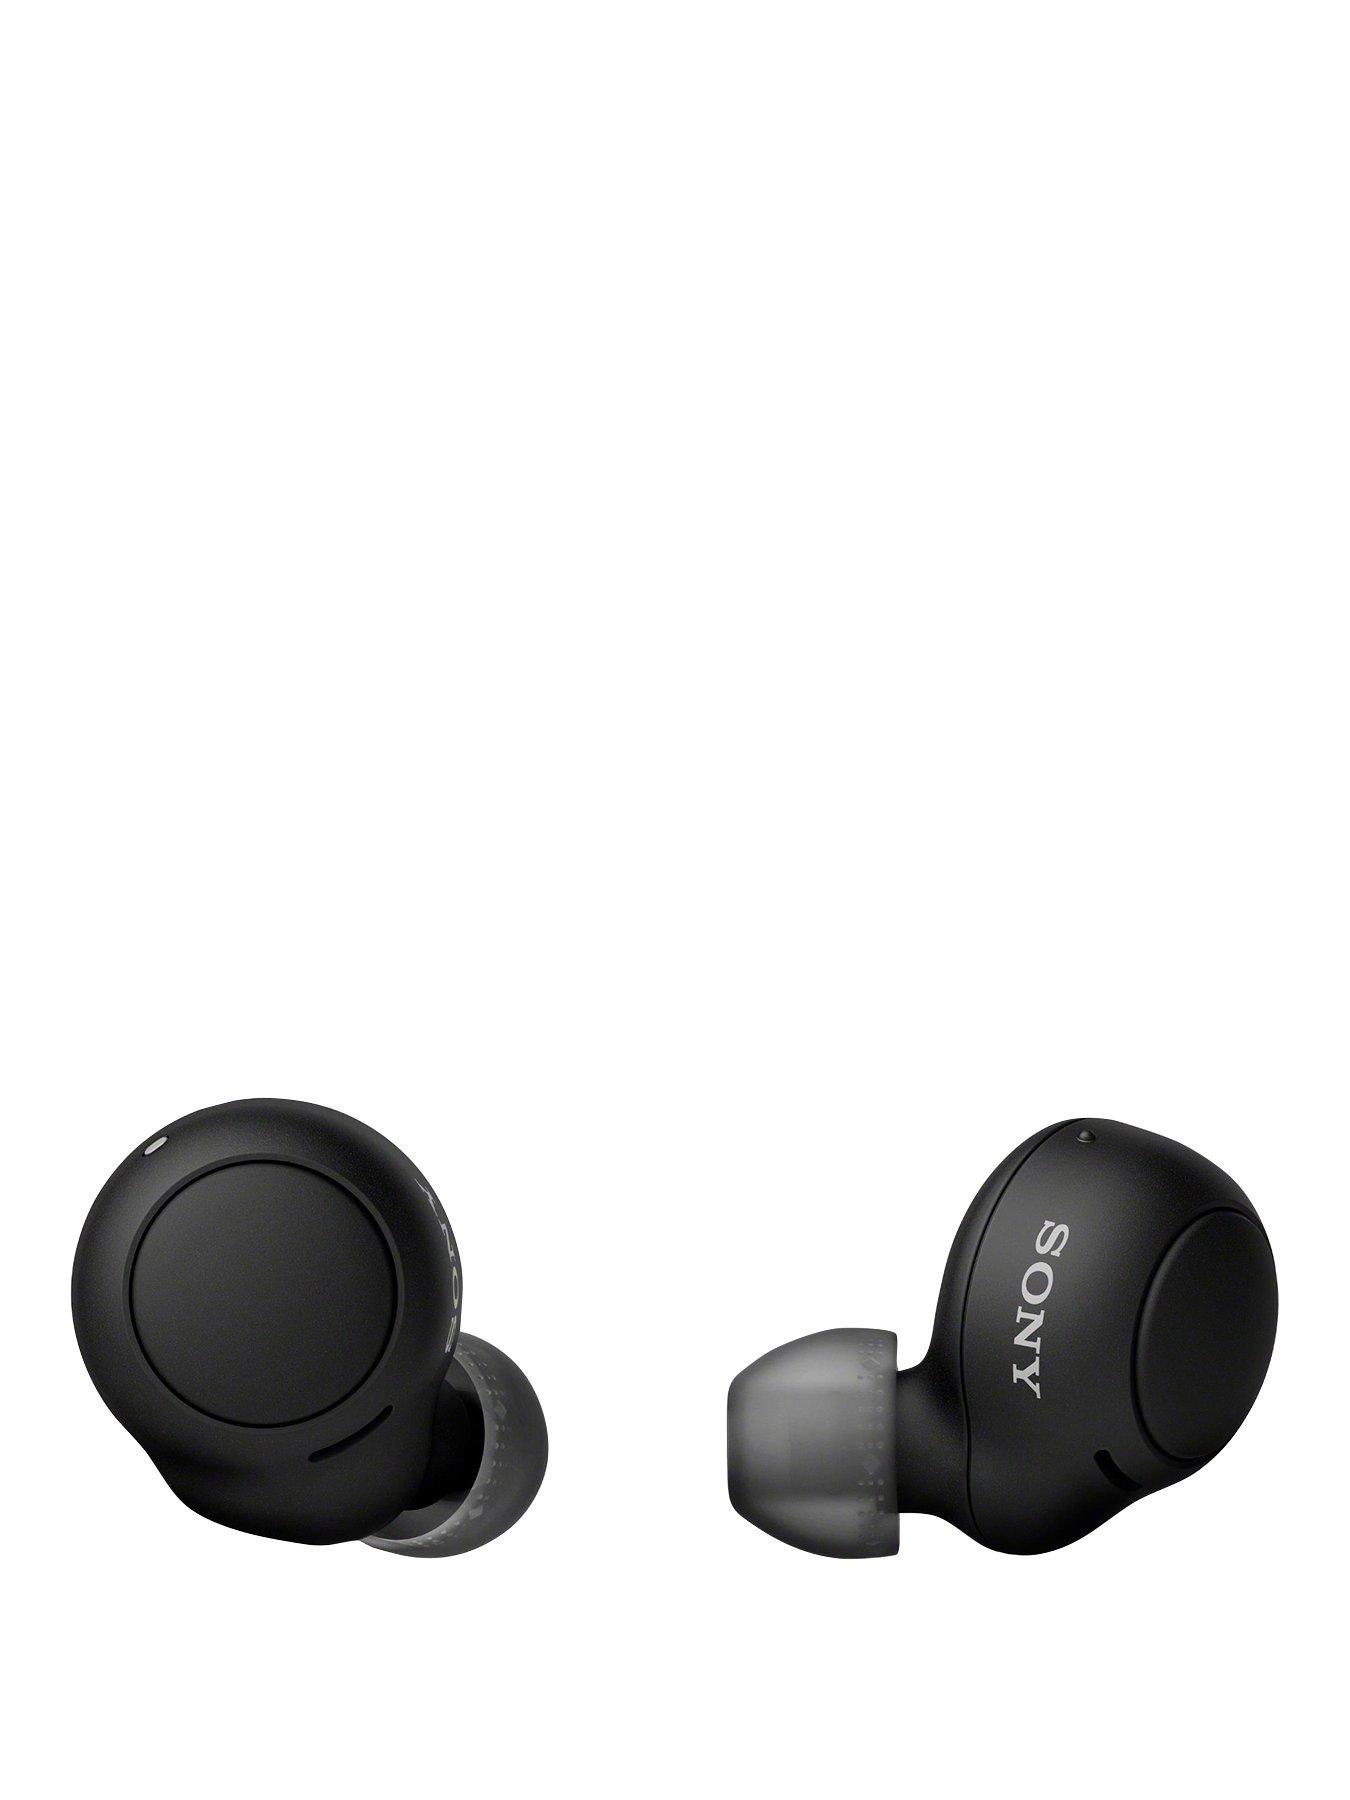 Sony WFC500, Audio, Headphones & Headsets on Carousell